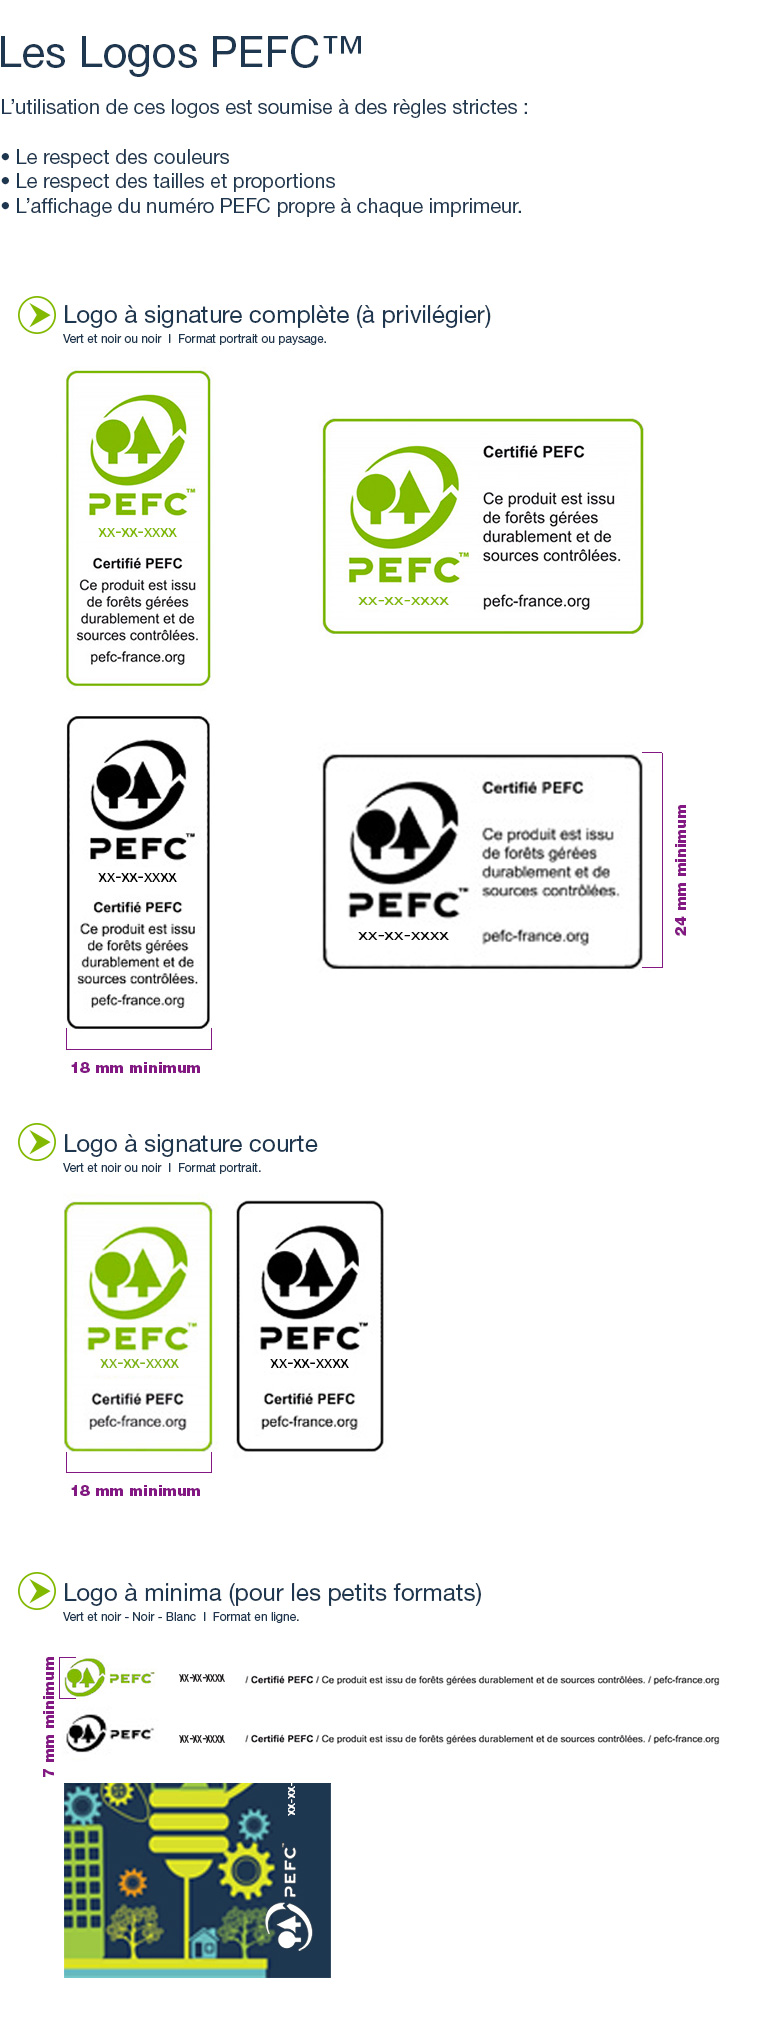 1-logo-PEFC.jpg